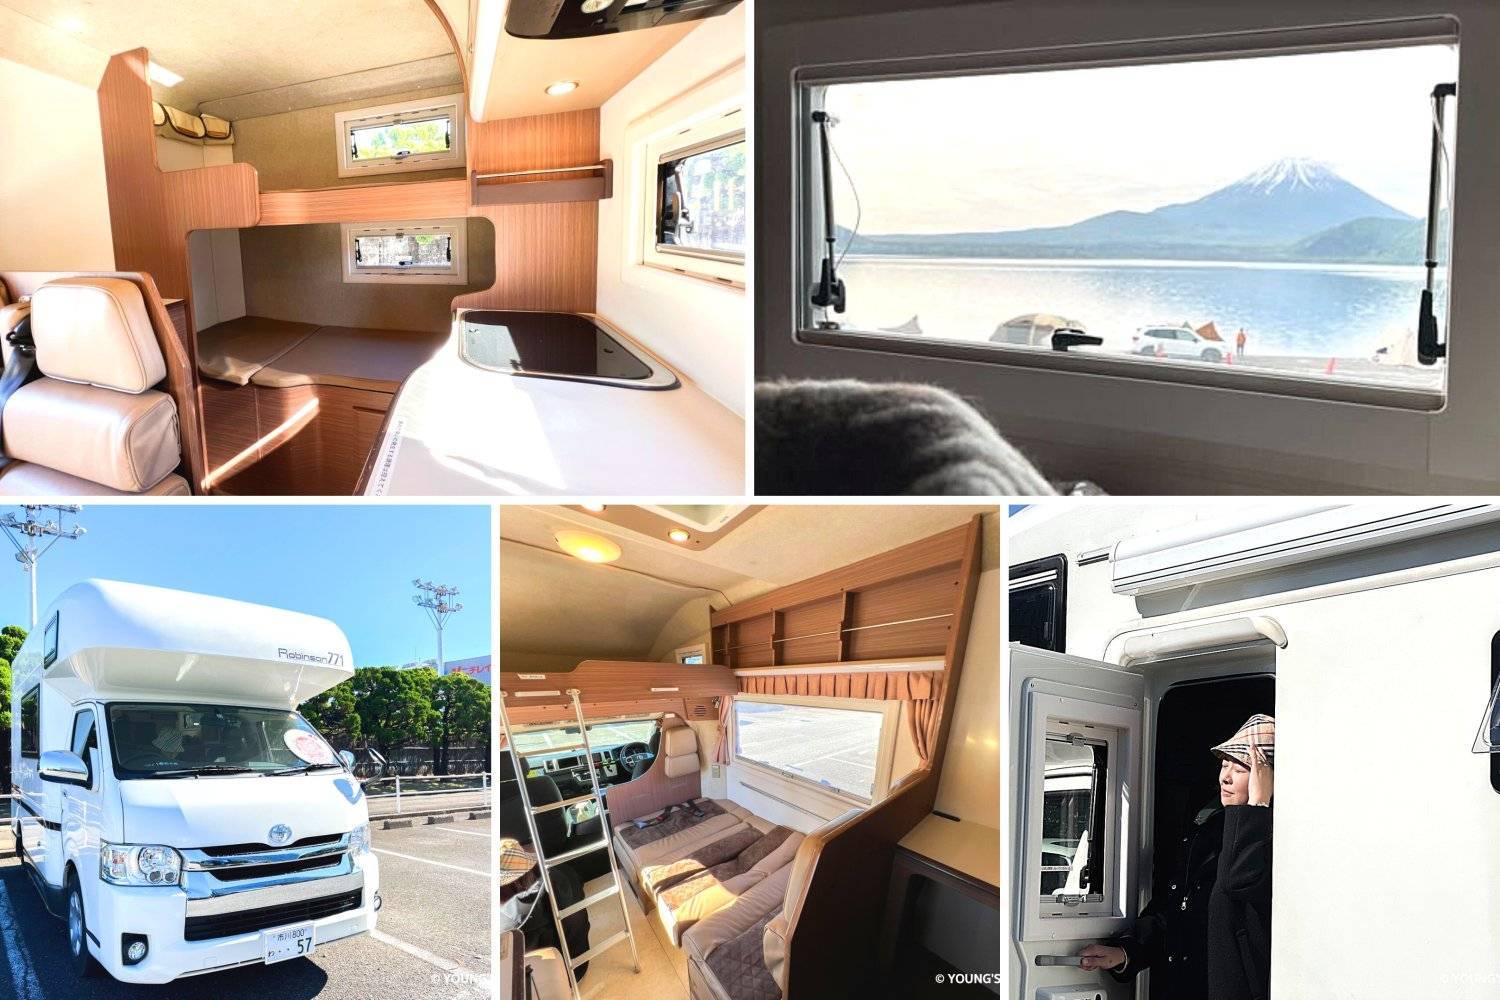 Young's Holidays 【Tokyo】Japan Rental 7 People Caravan RV Road Trip Experience (CRB771) 1